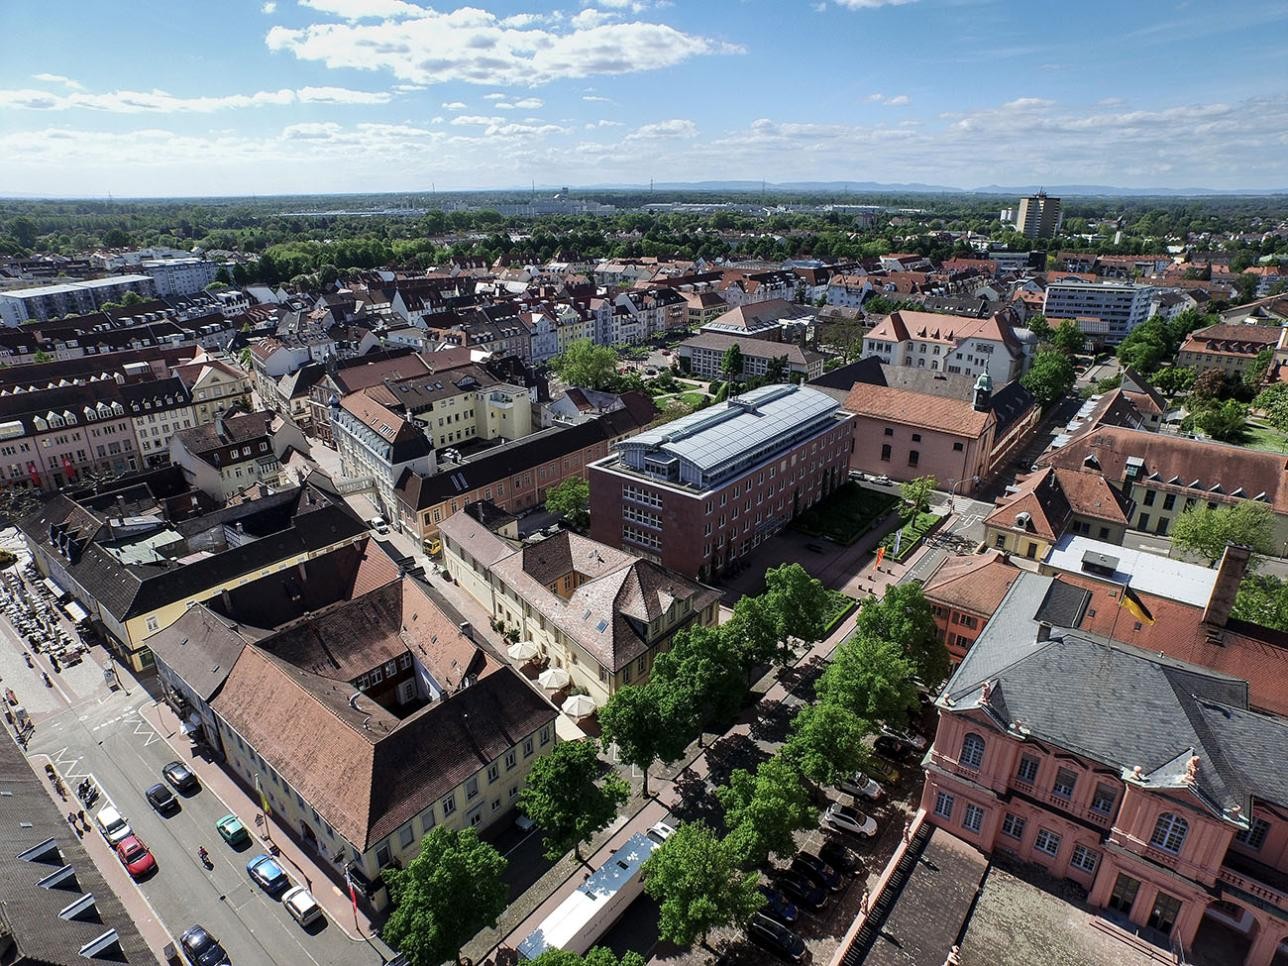 Aerial view city Rastatt